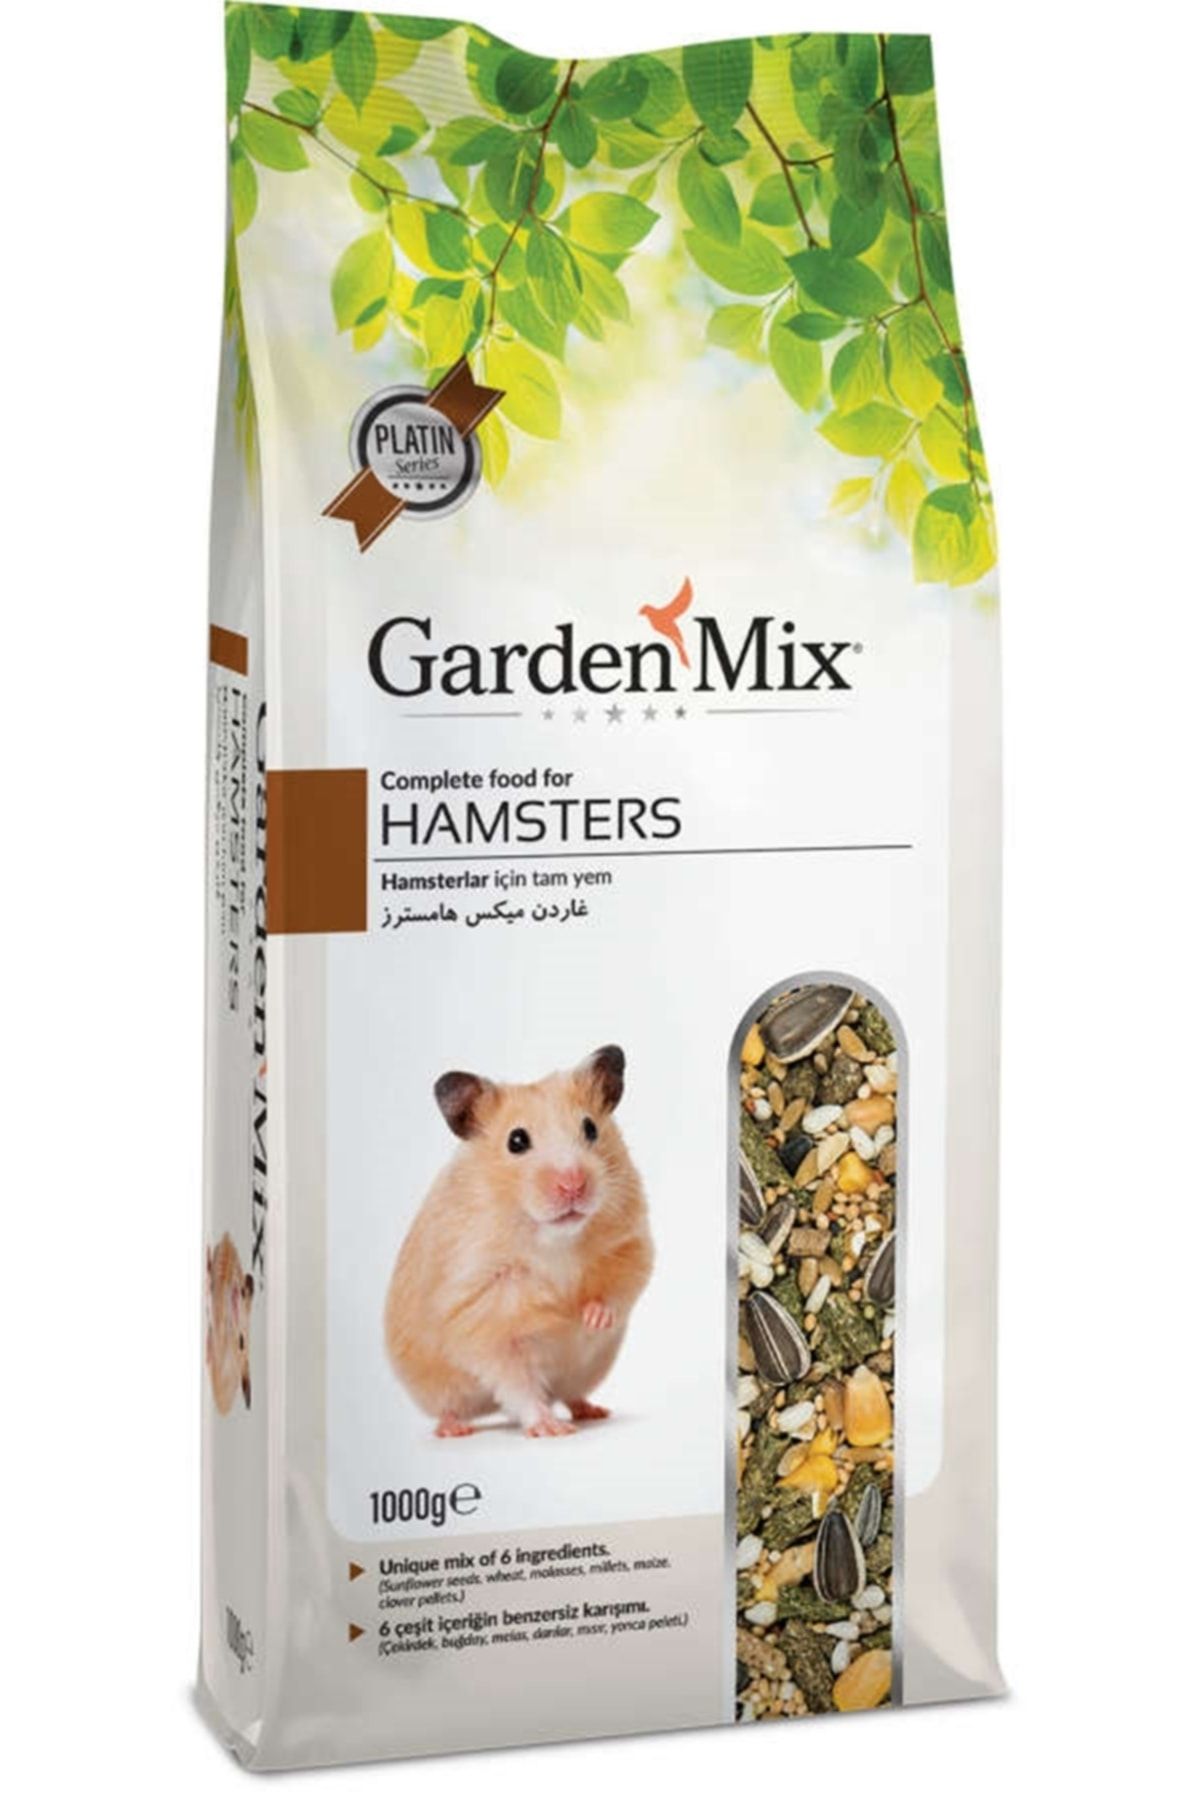 Gardenmix Garden Mix Platin Hamster Yemi 1000 Gr